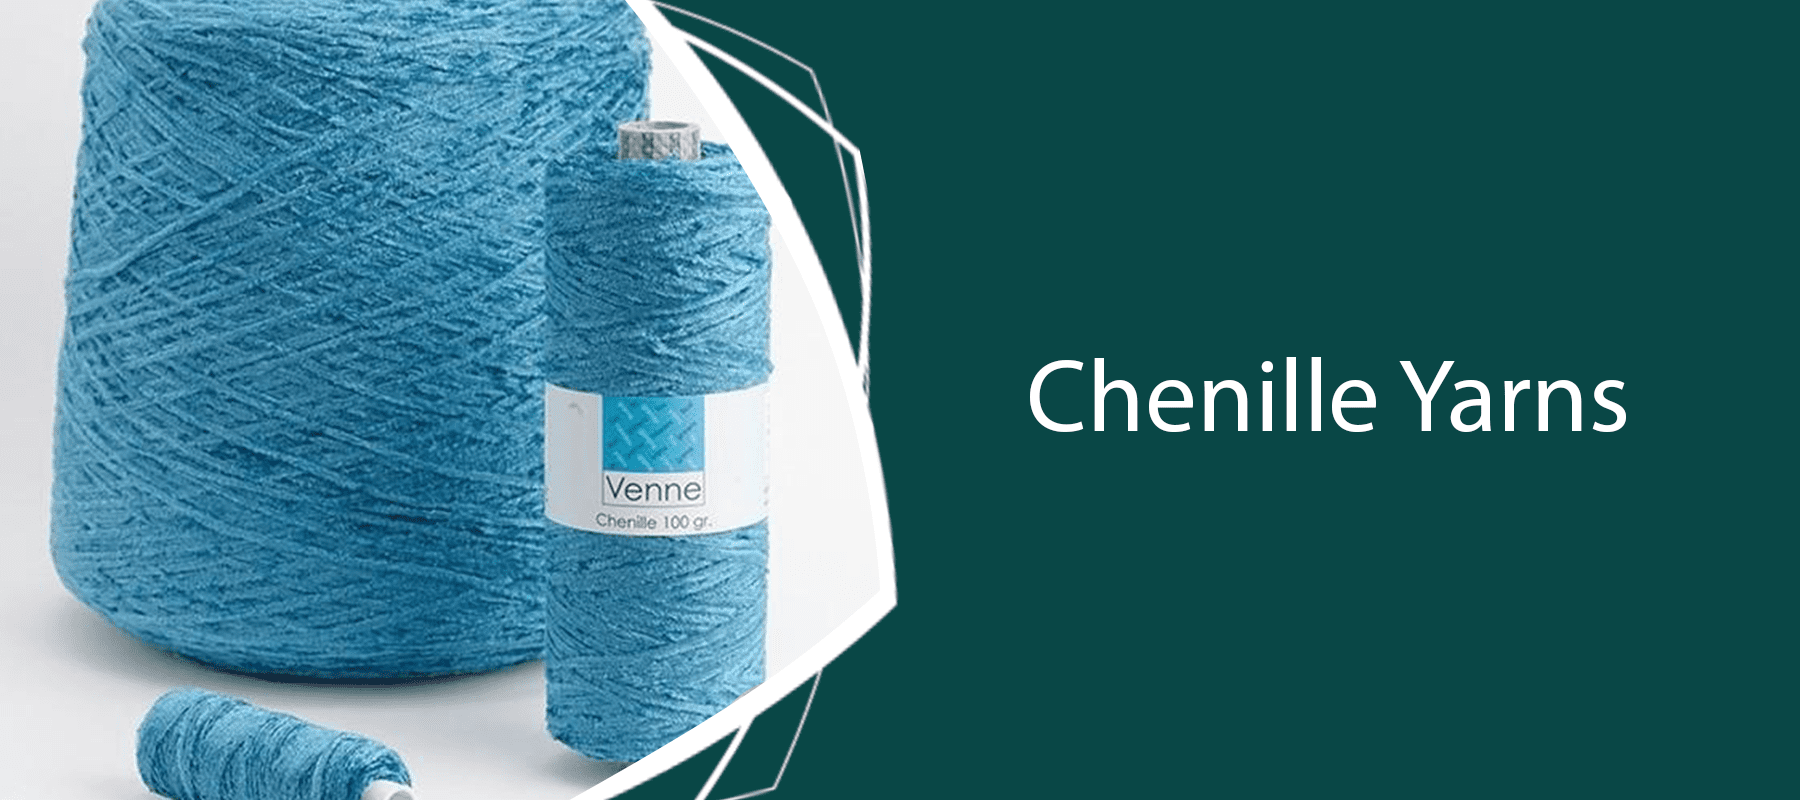 Chenille Yarns Australia: Weaving, Stitching Craft Yarns